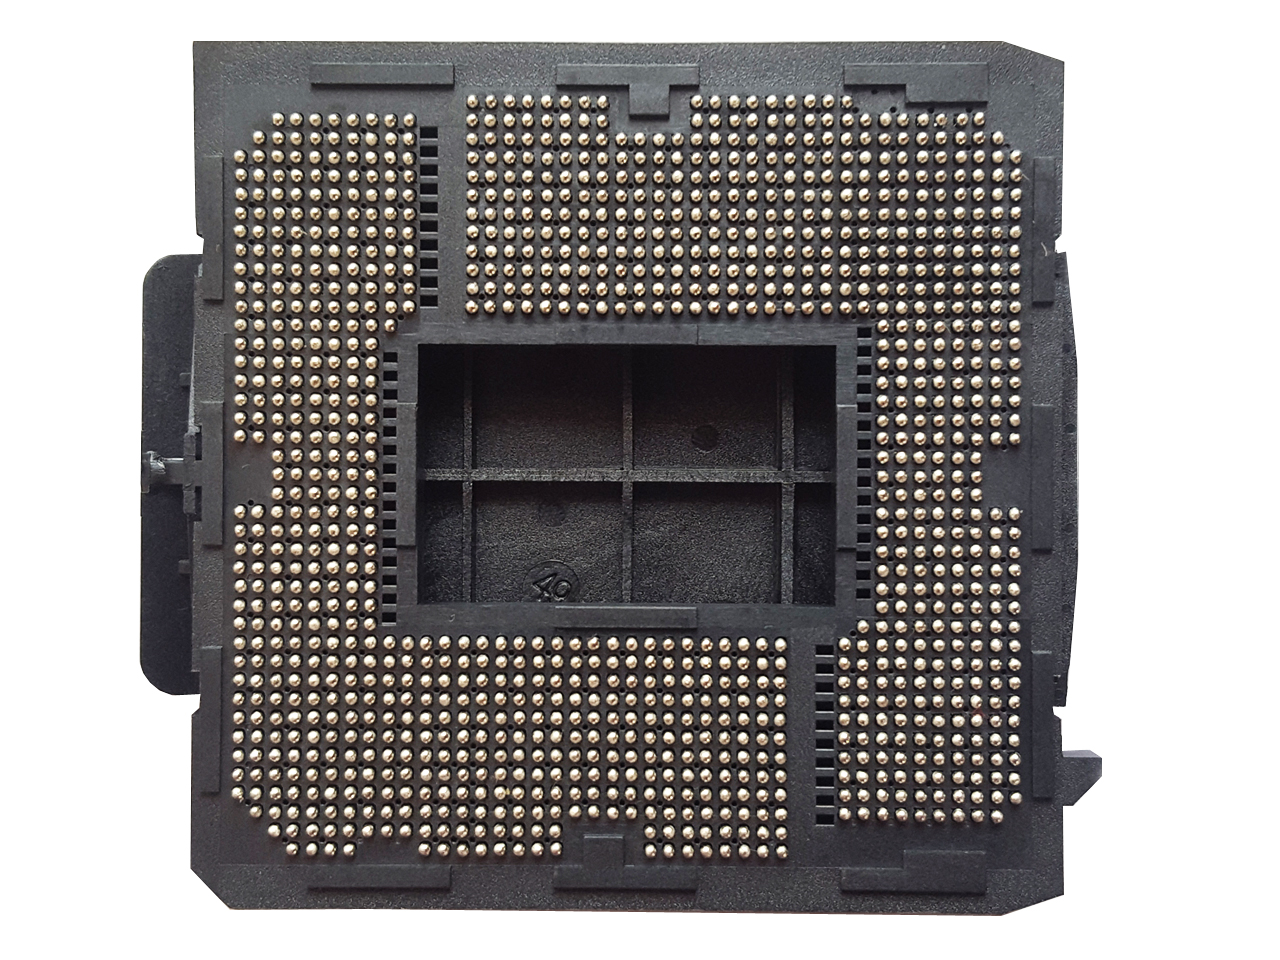 Сокет разъем. Процессоры с сокетом lga1155. Сокет лга 1155. Сокеты LGA 1150, LGA 1151, LGA 1156, LGA 1155. Intel LGA 1150 Socket.